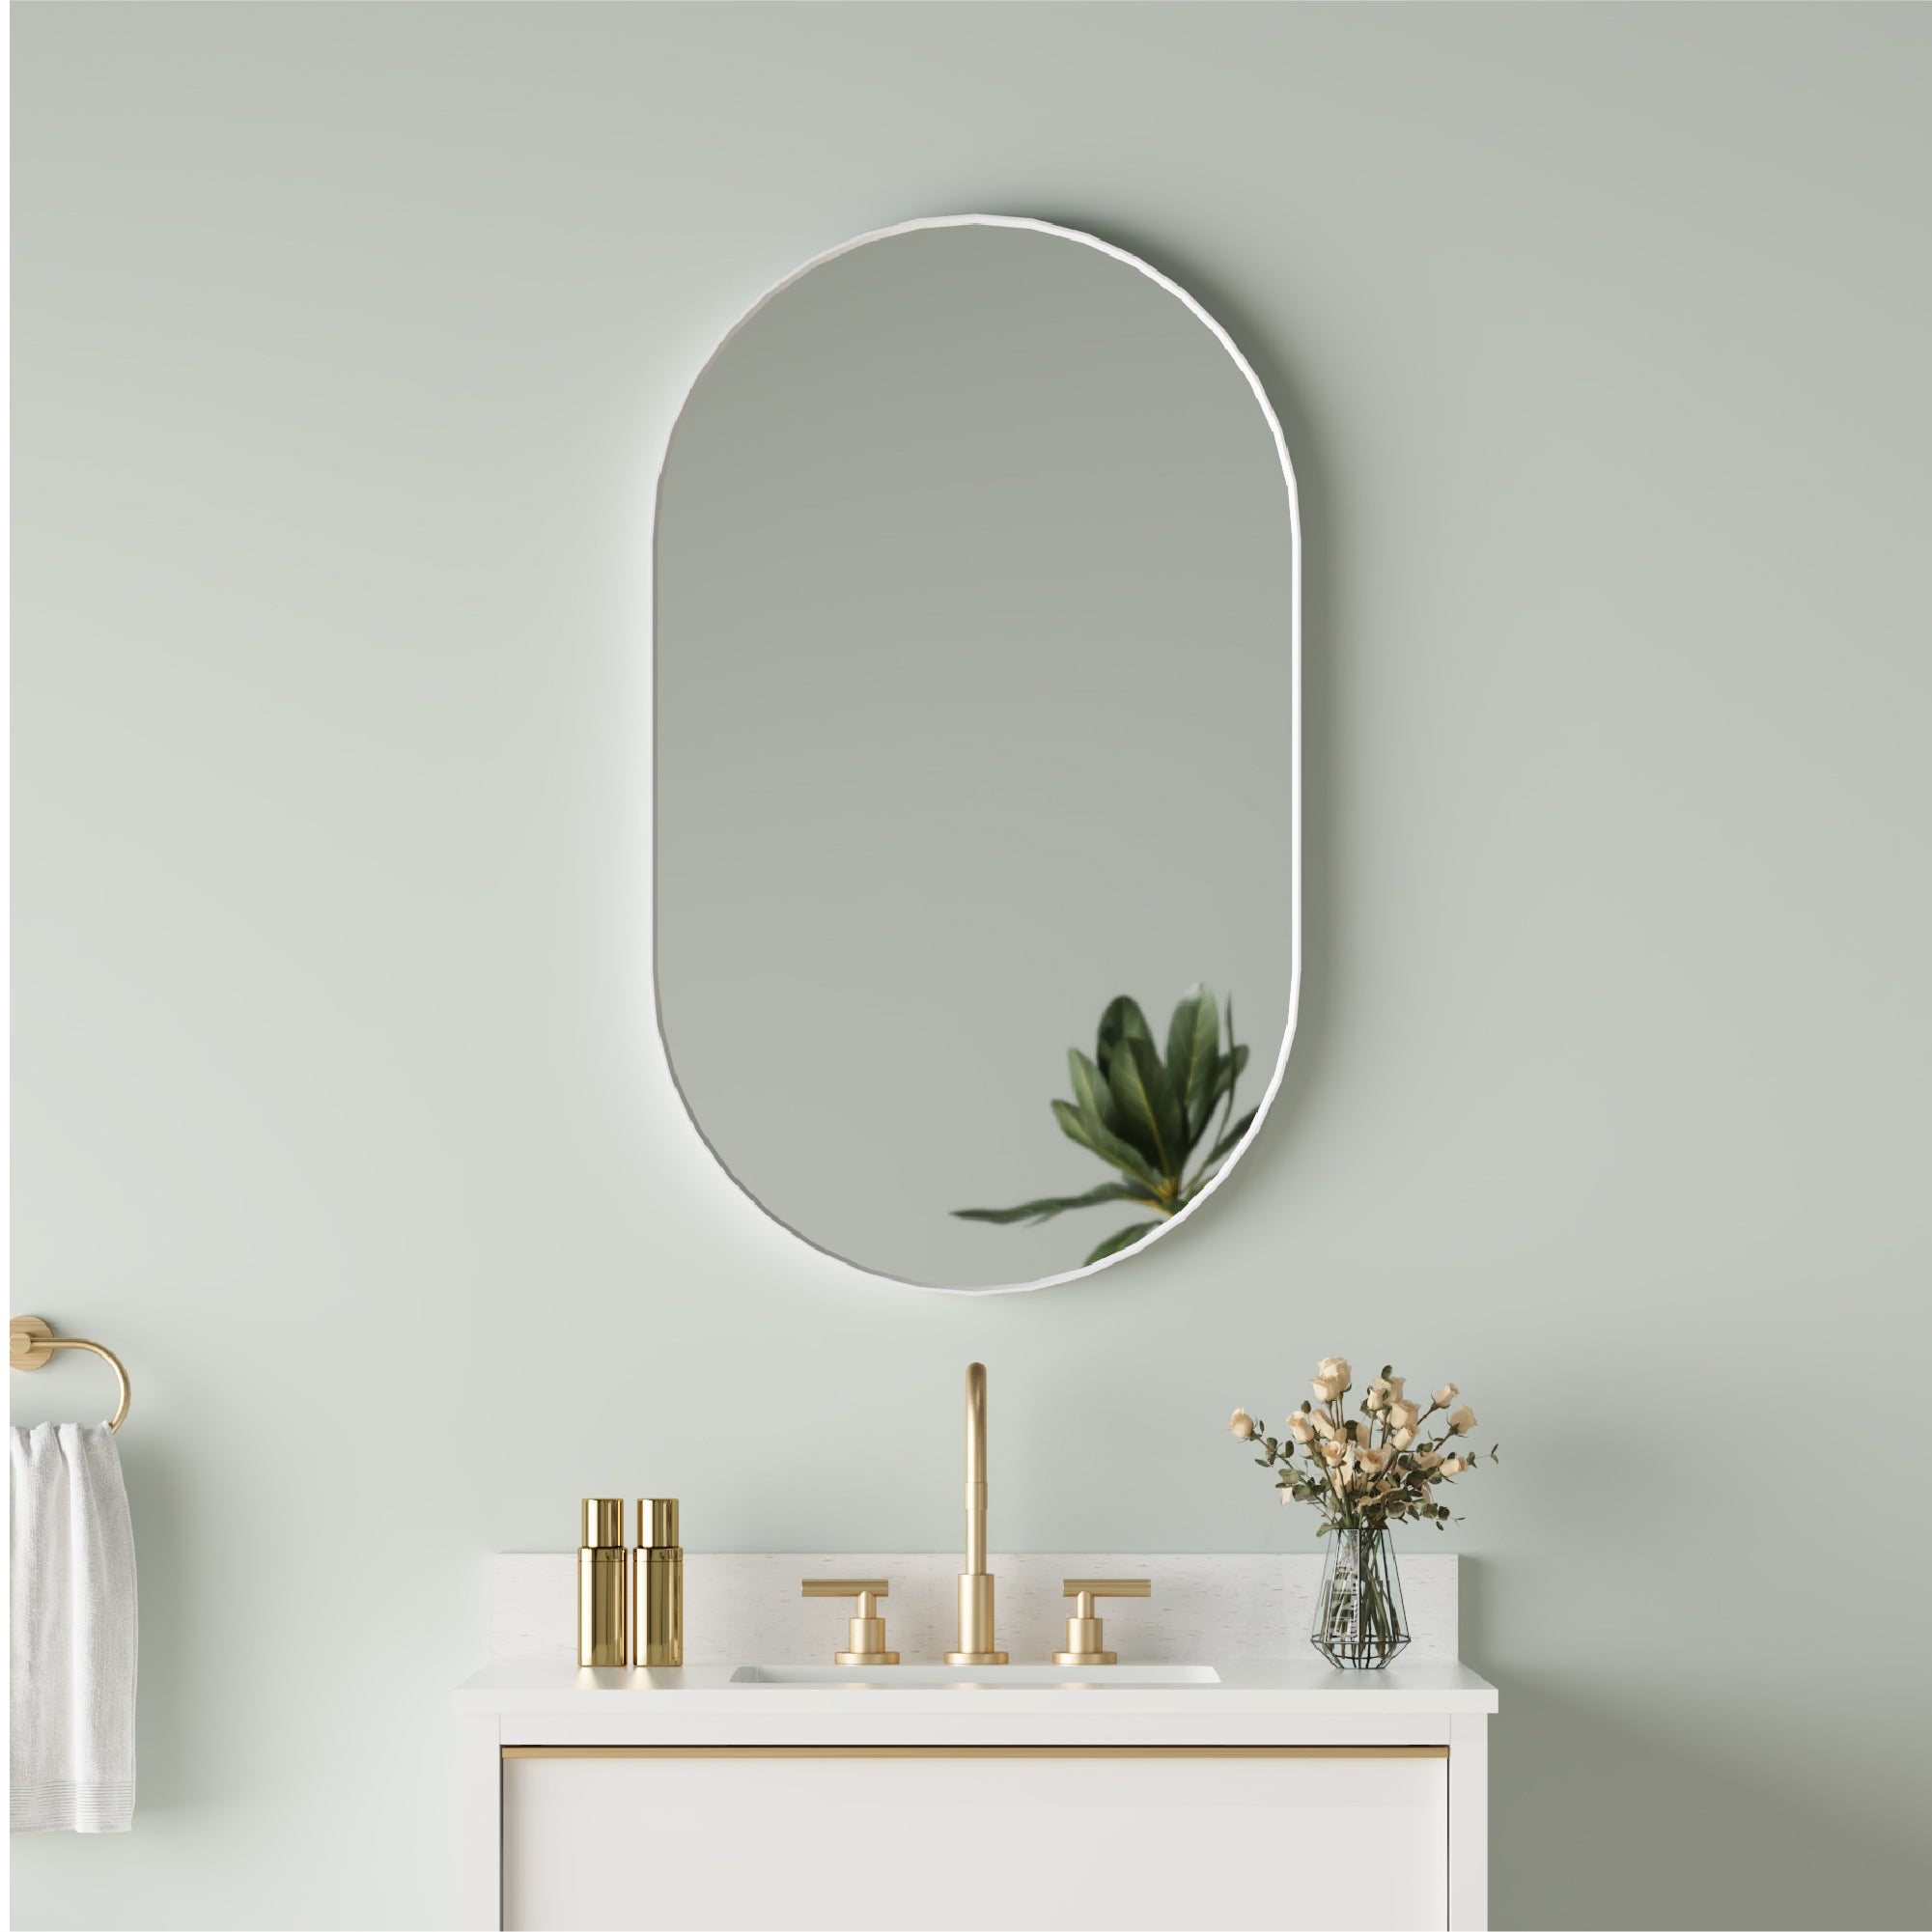 24 in. W x 40 in. H Oval Framed Wall Mount Bathroom Vanity Mirror in White